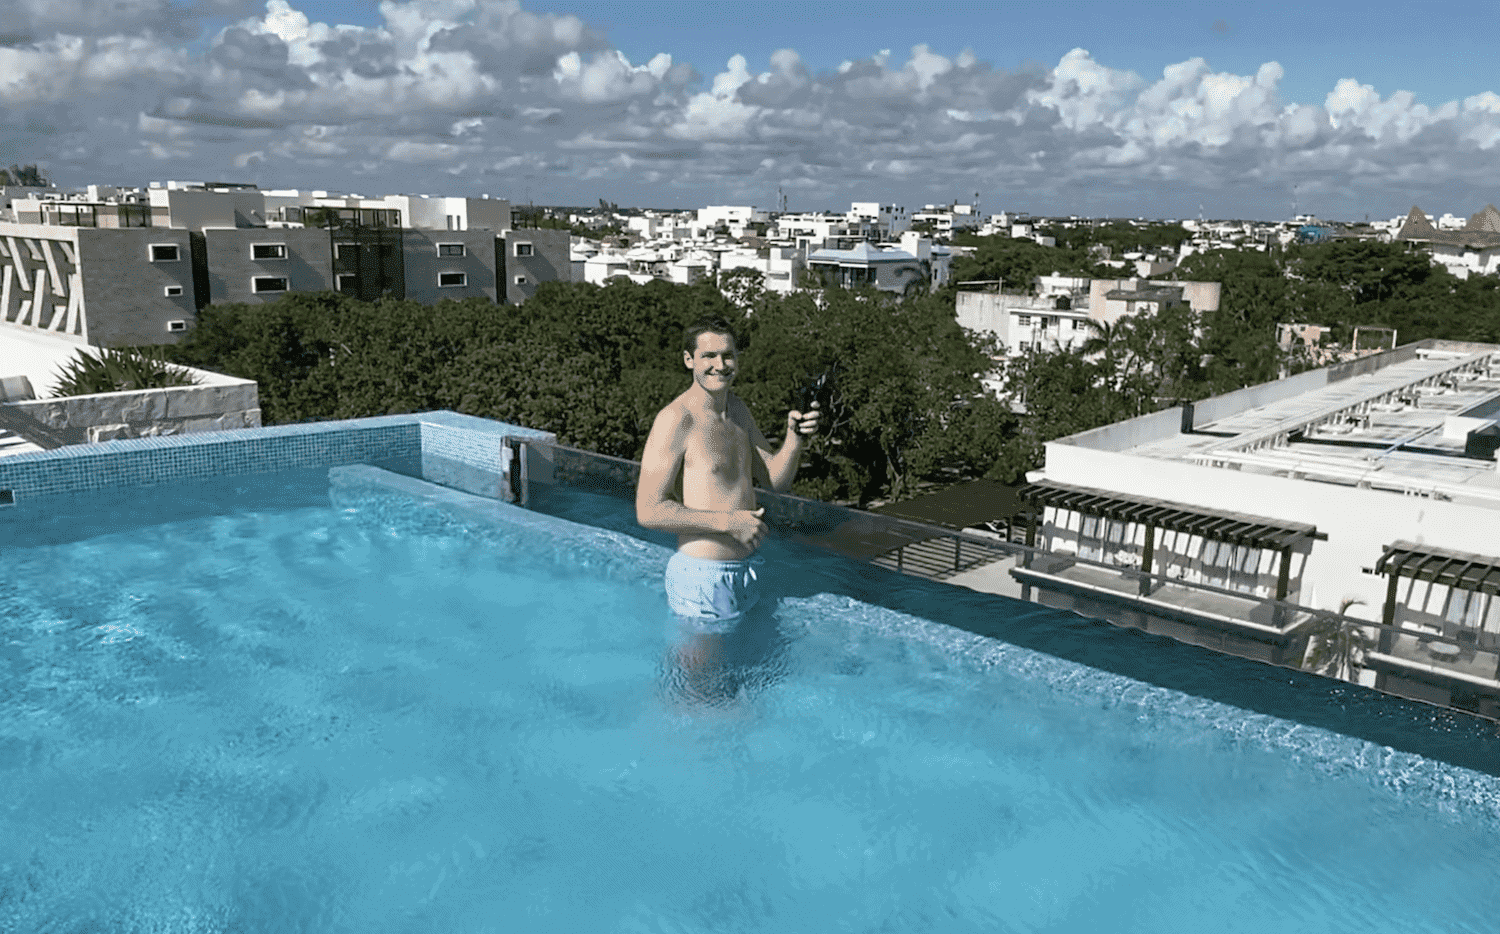 matthew swimming rooftop pool playa del carmen